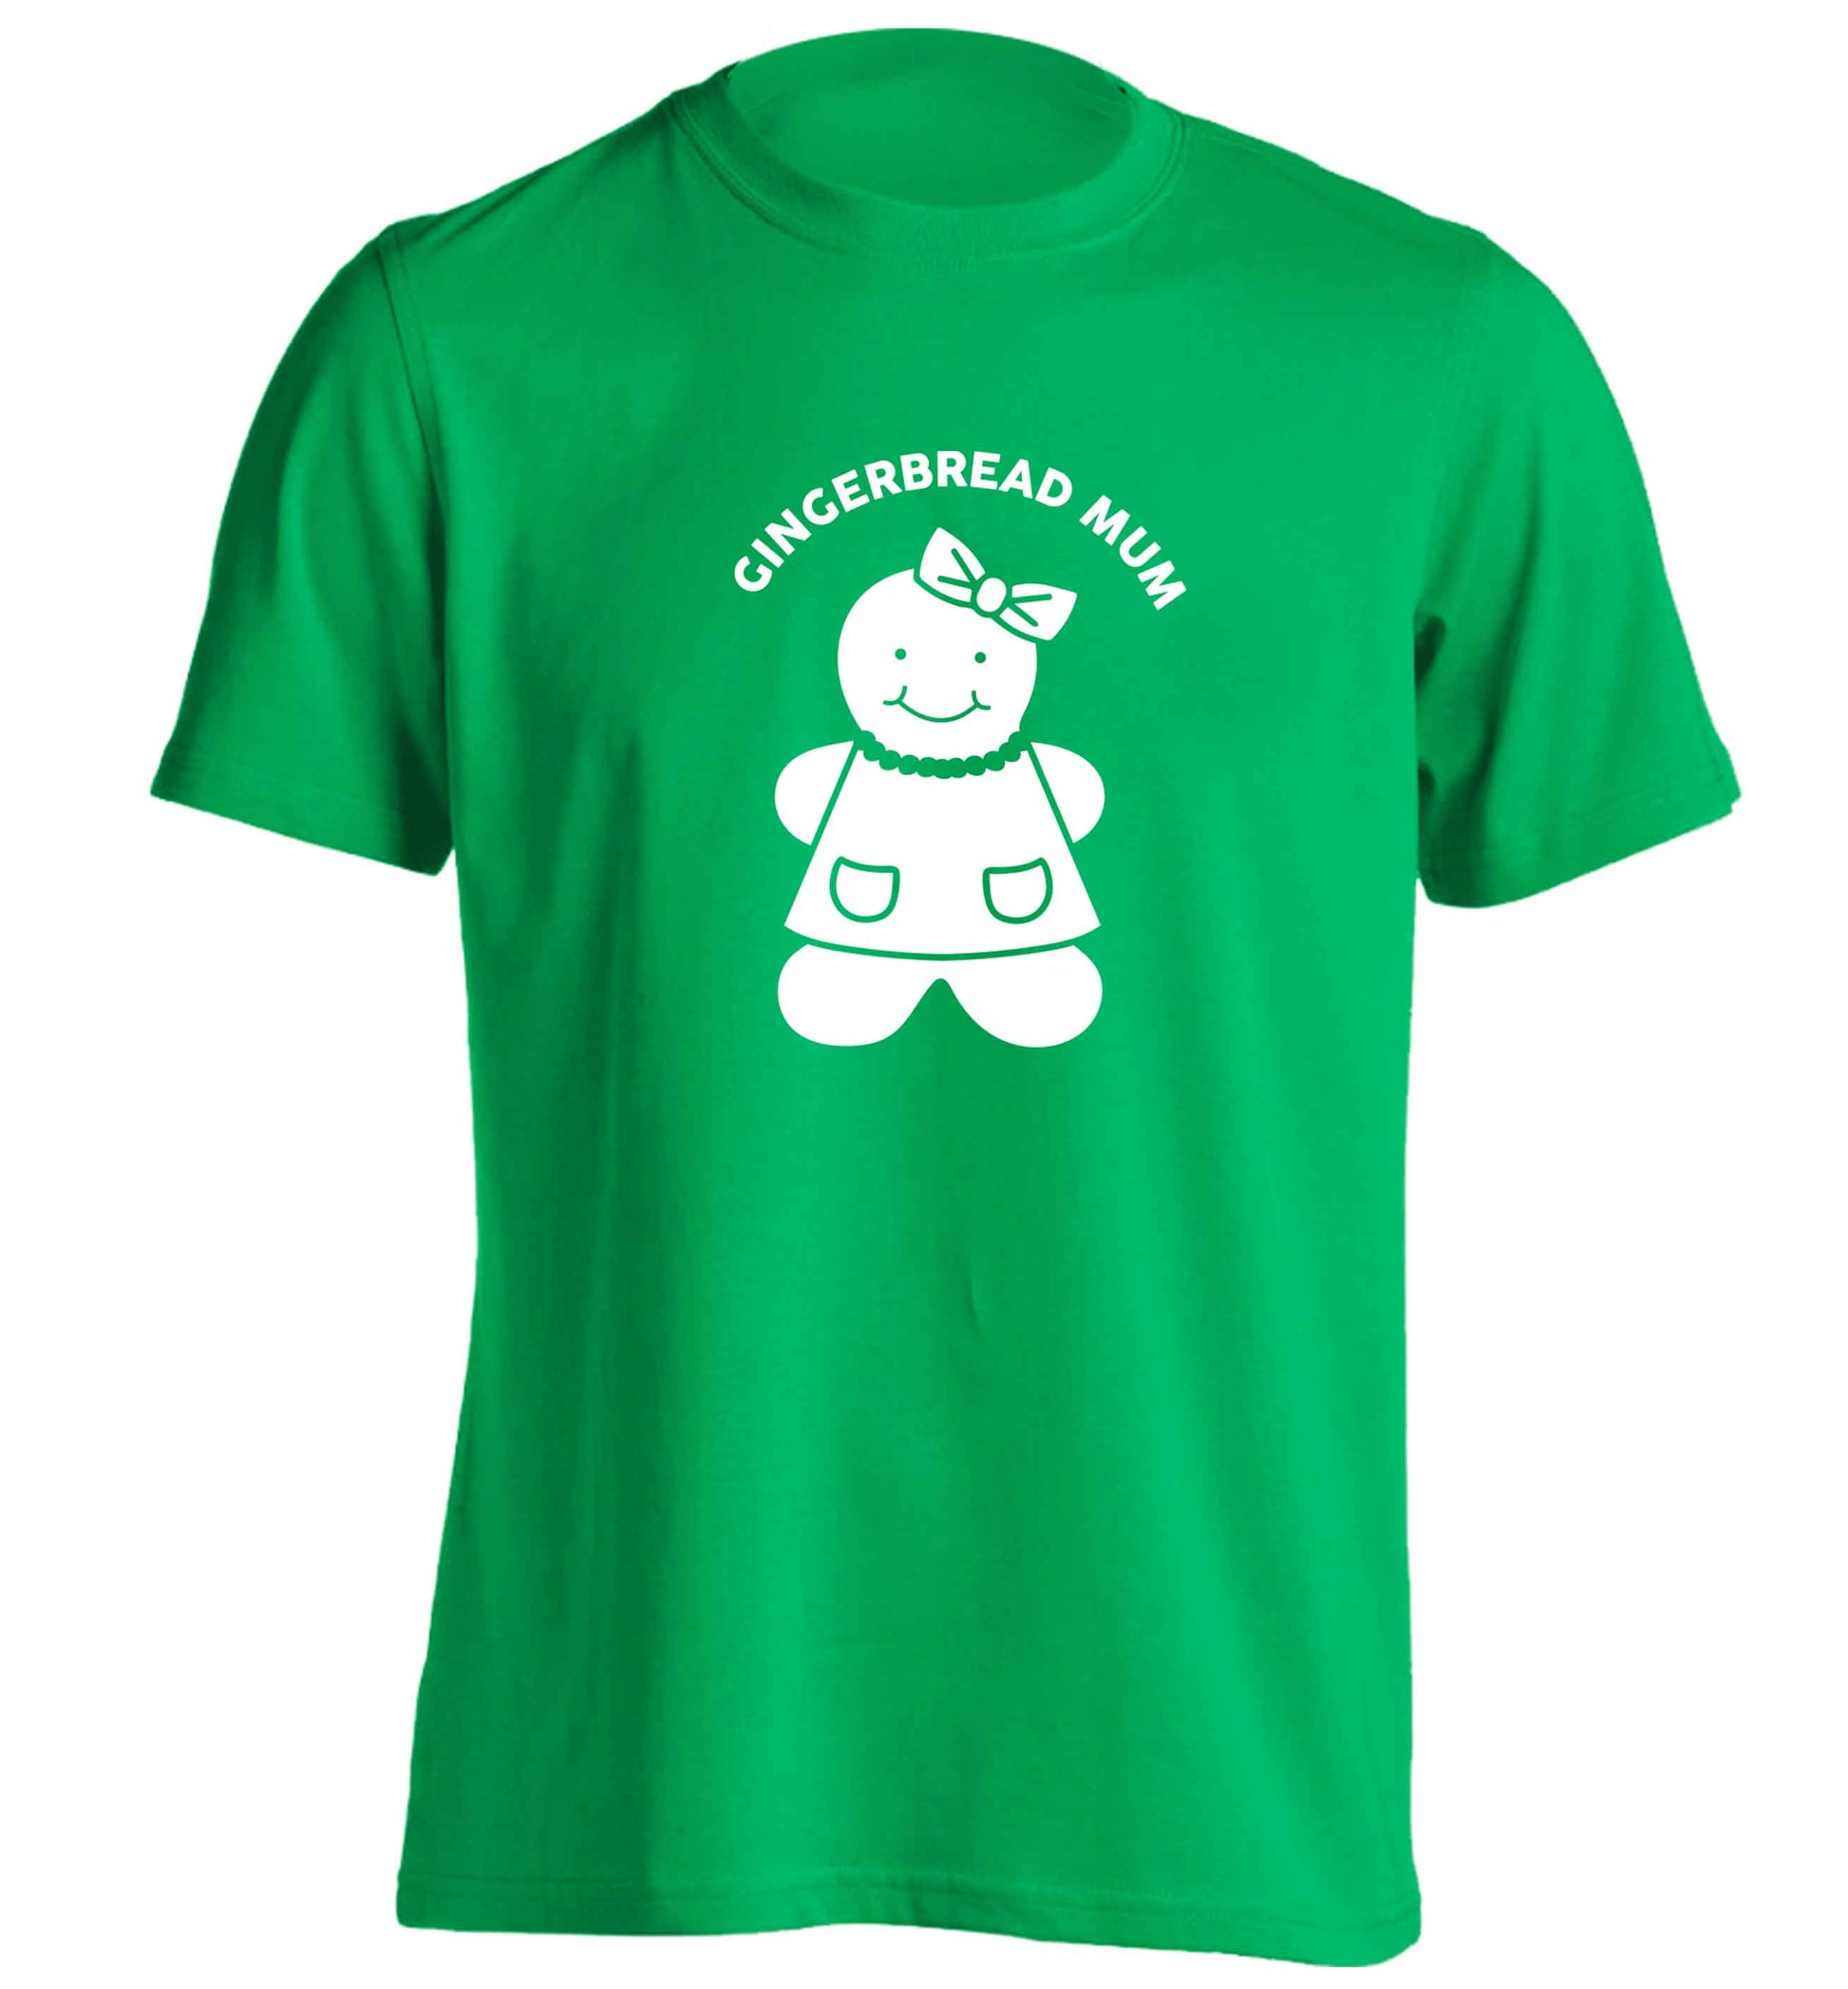 Merry Christmas adults unisex green Tshirt 2XL